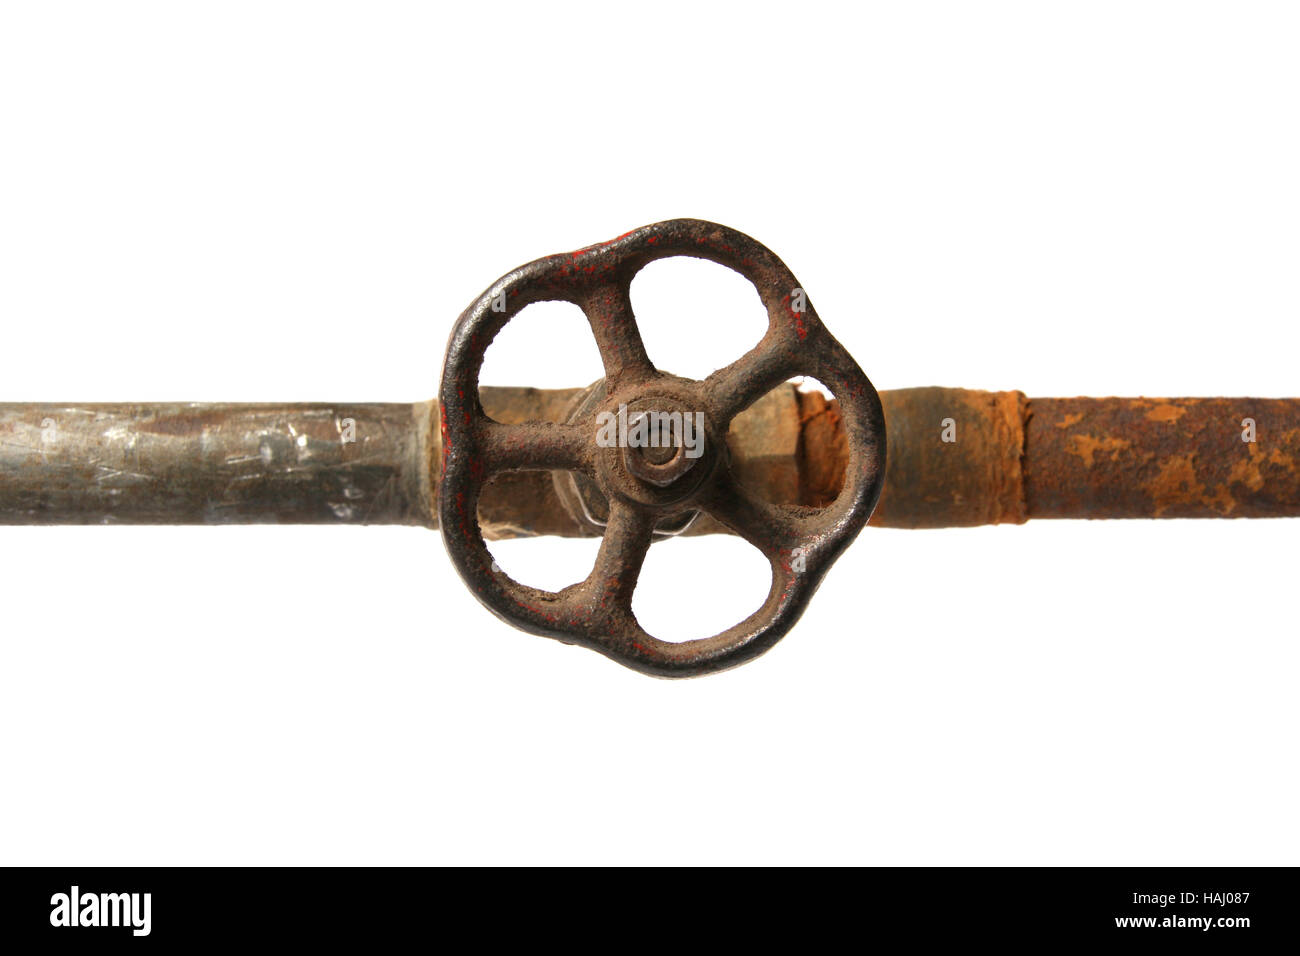 Rusty valve Stock Photo